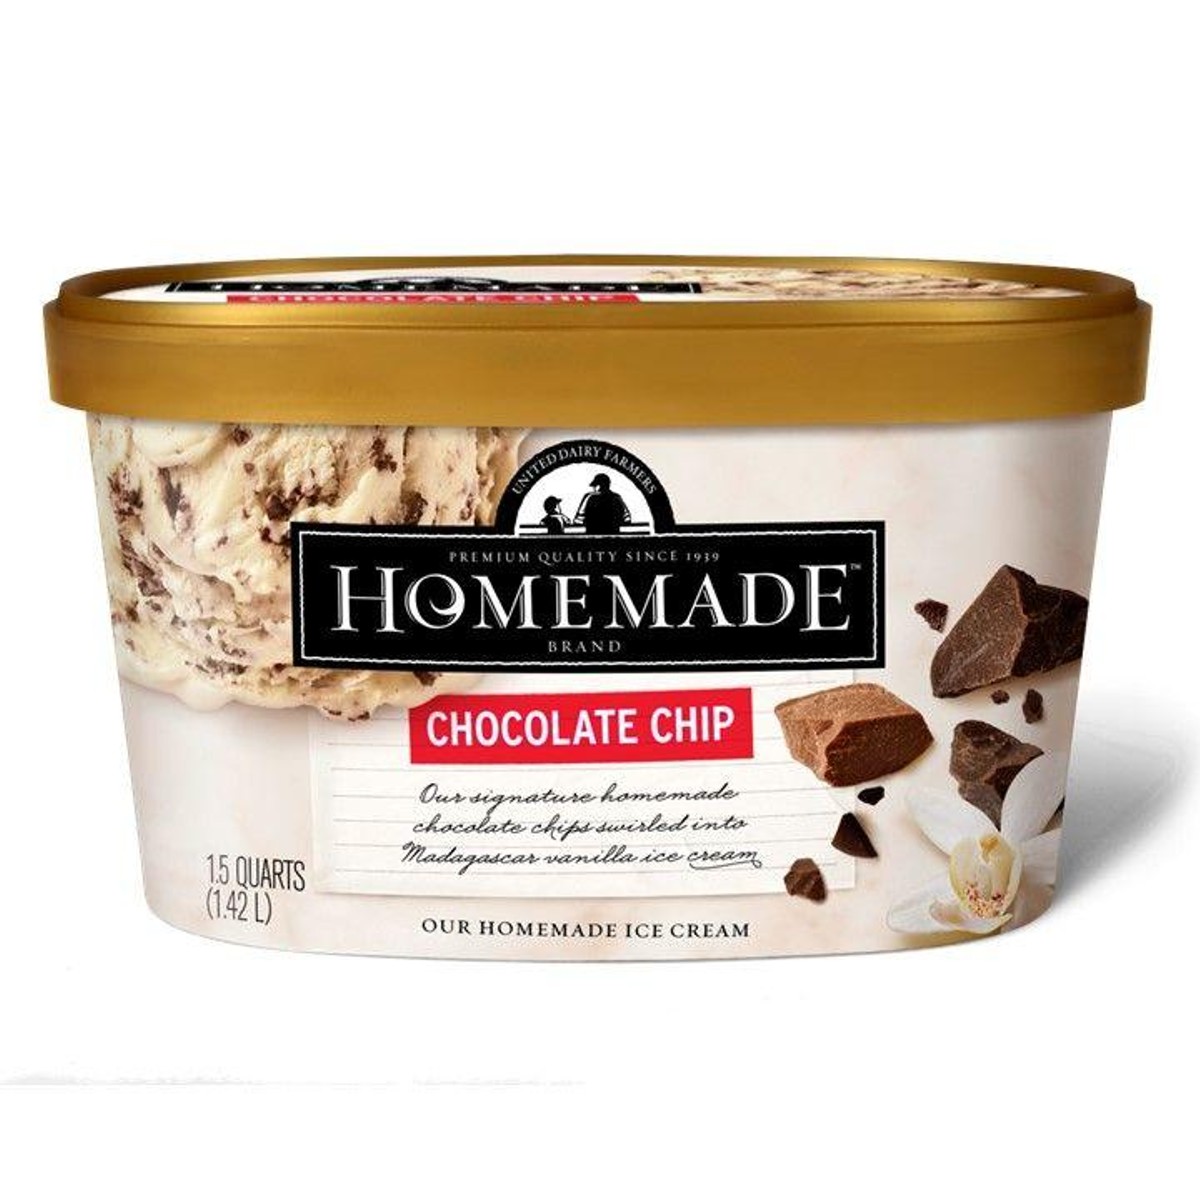 Hand-Dipped Ice Cream Flavors - UDF